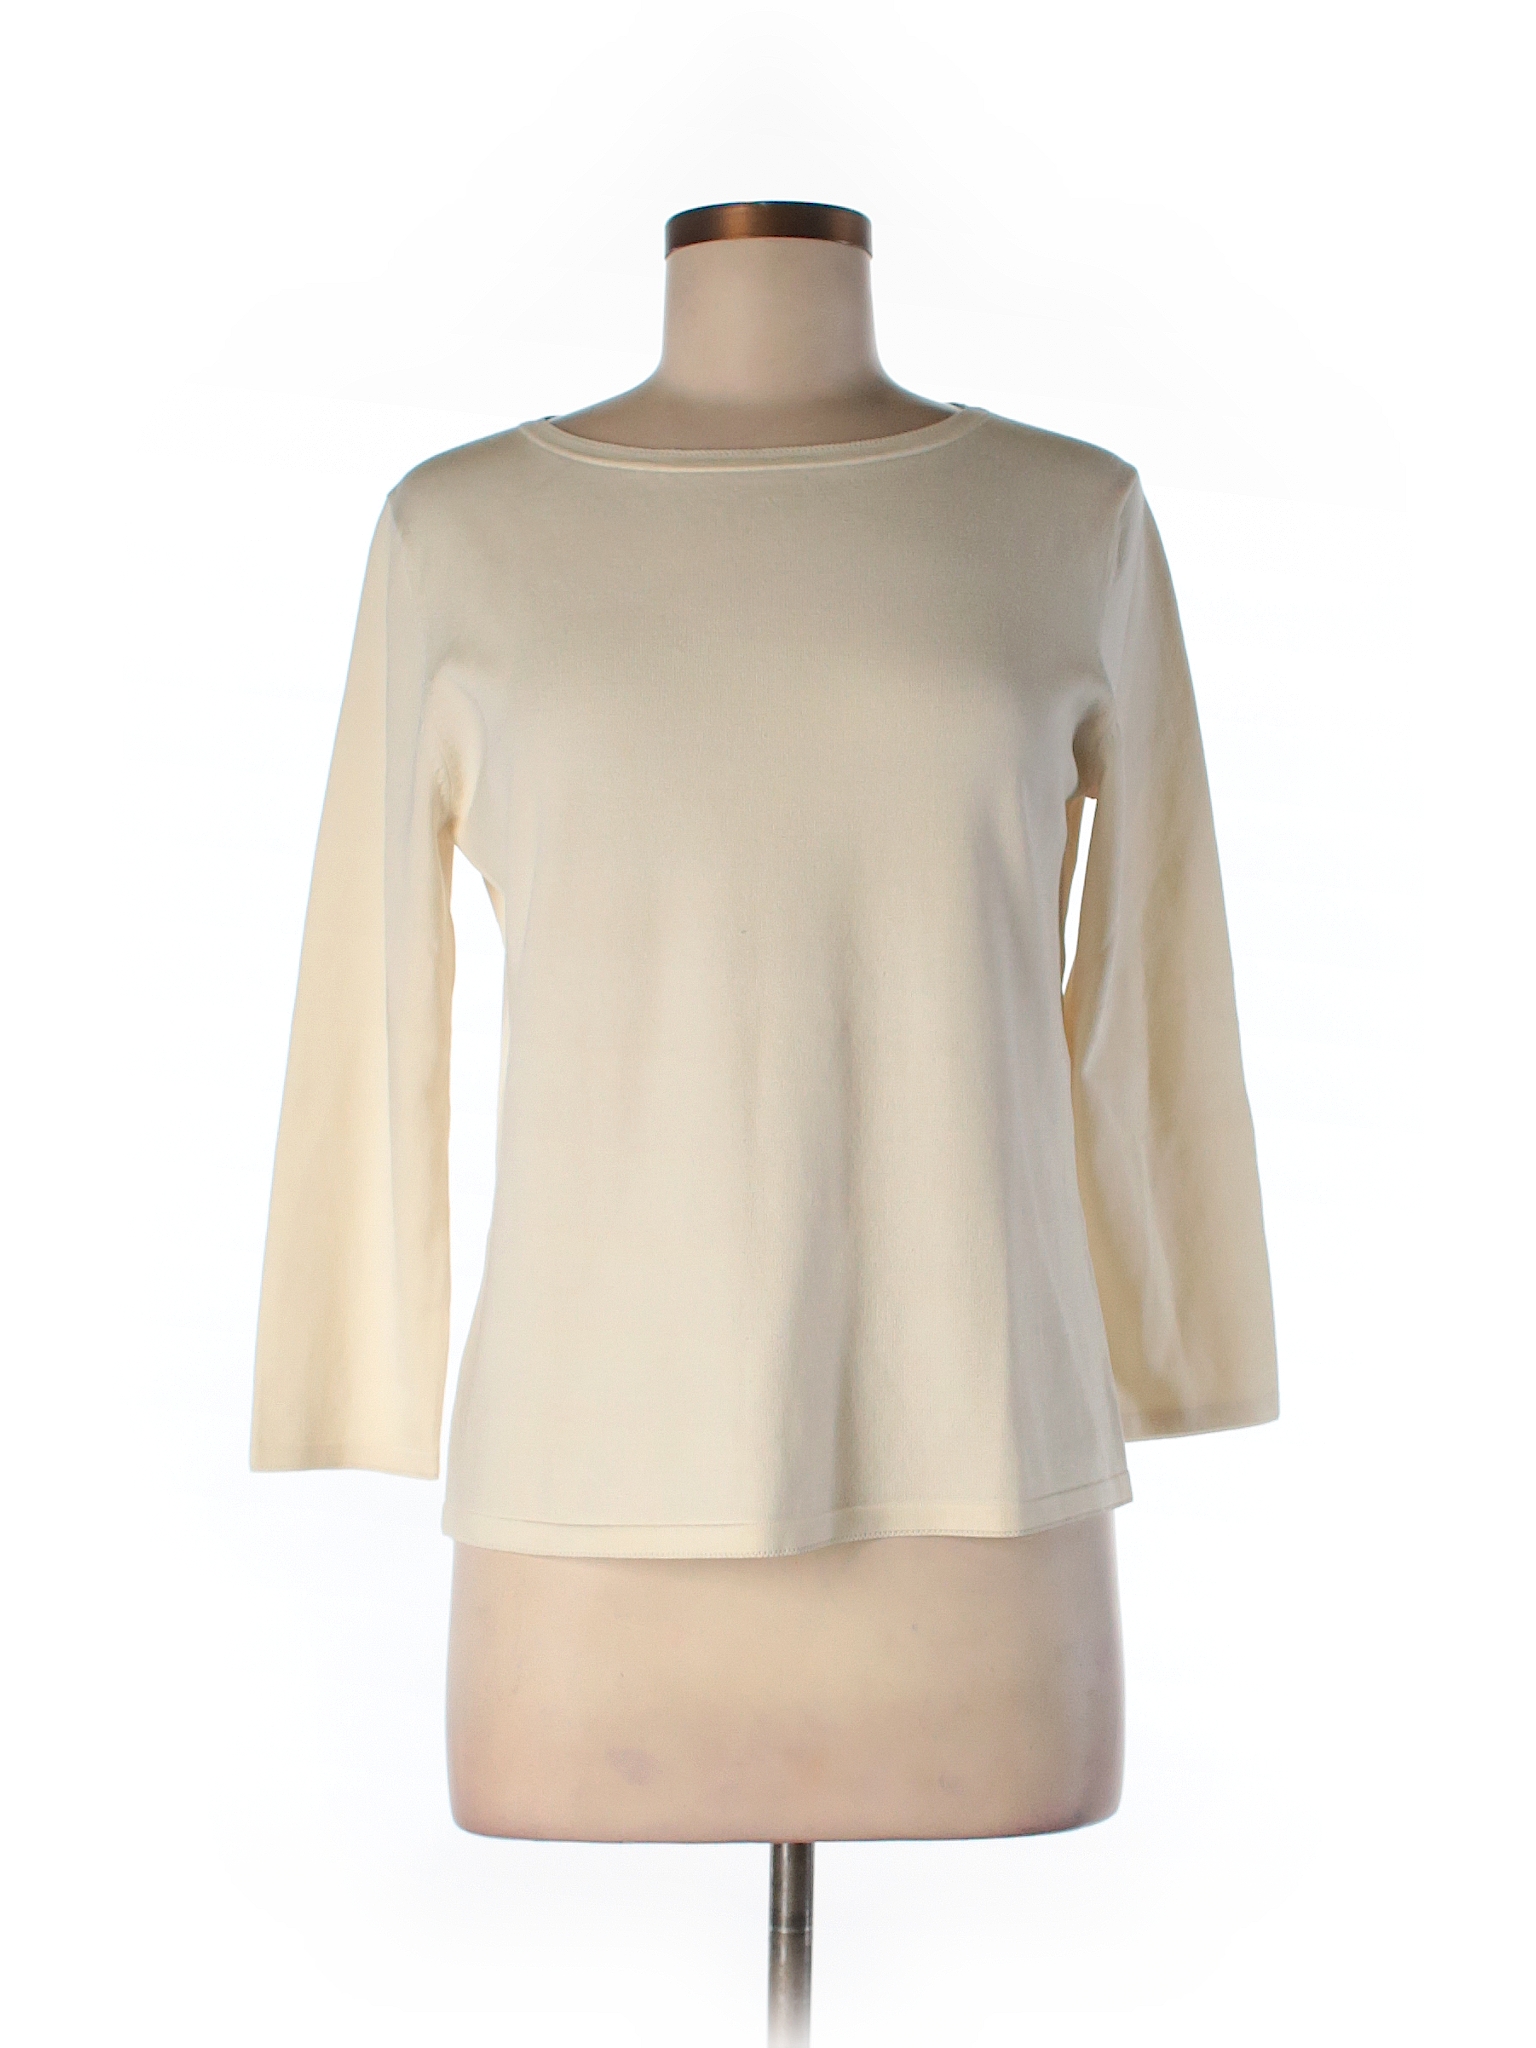 Pendleton Solid Beige Silk Pullover Sweater Size S - 79% off | thredUP